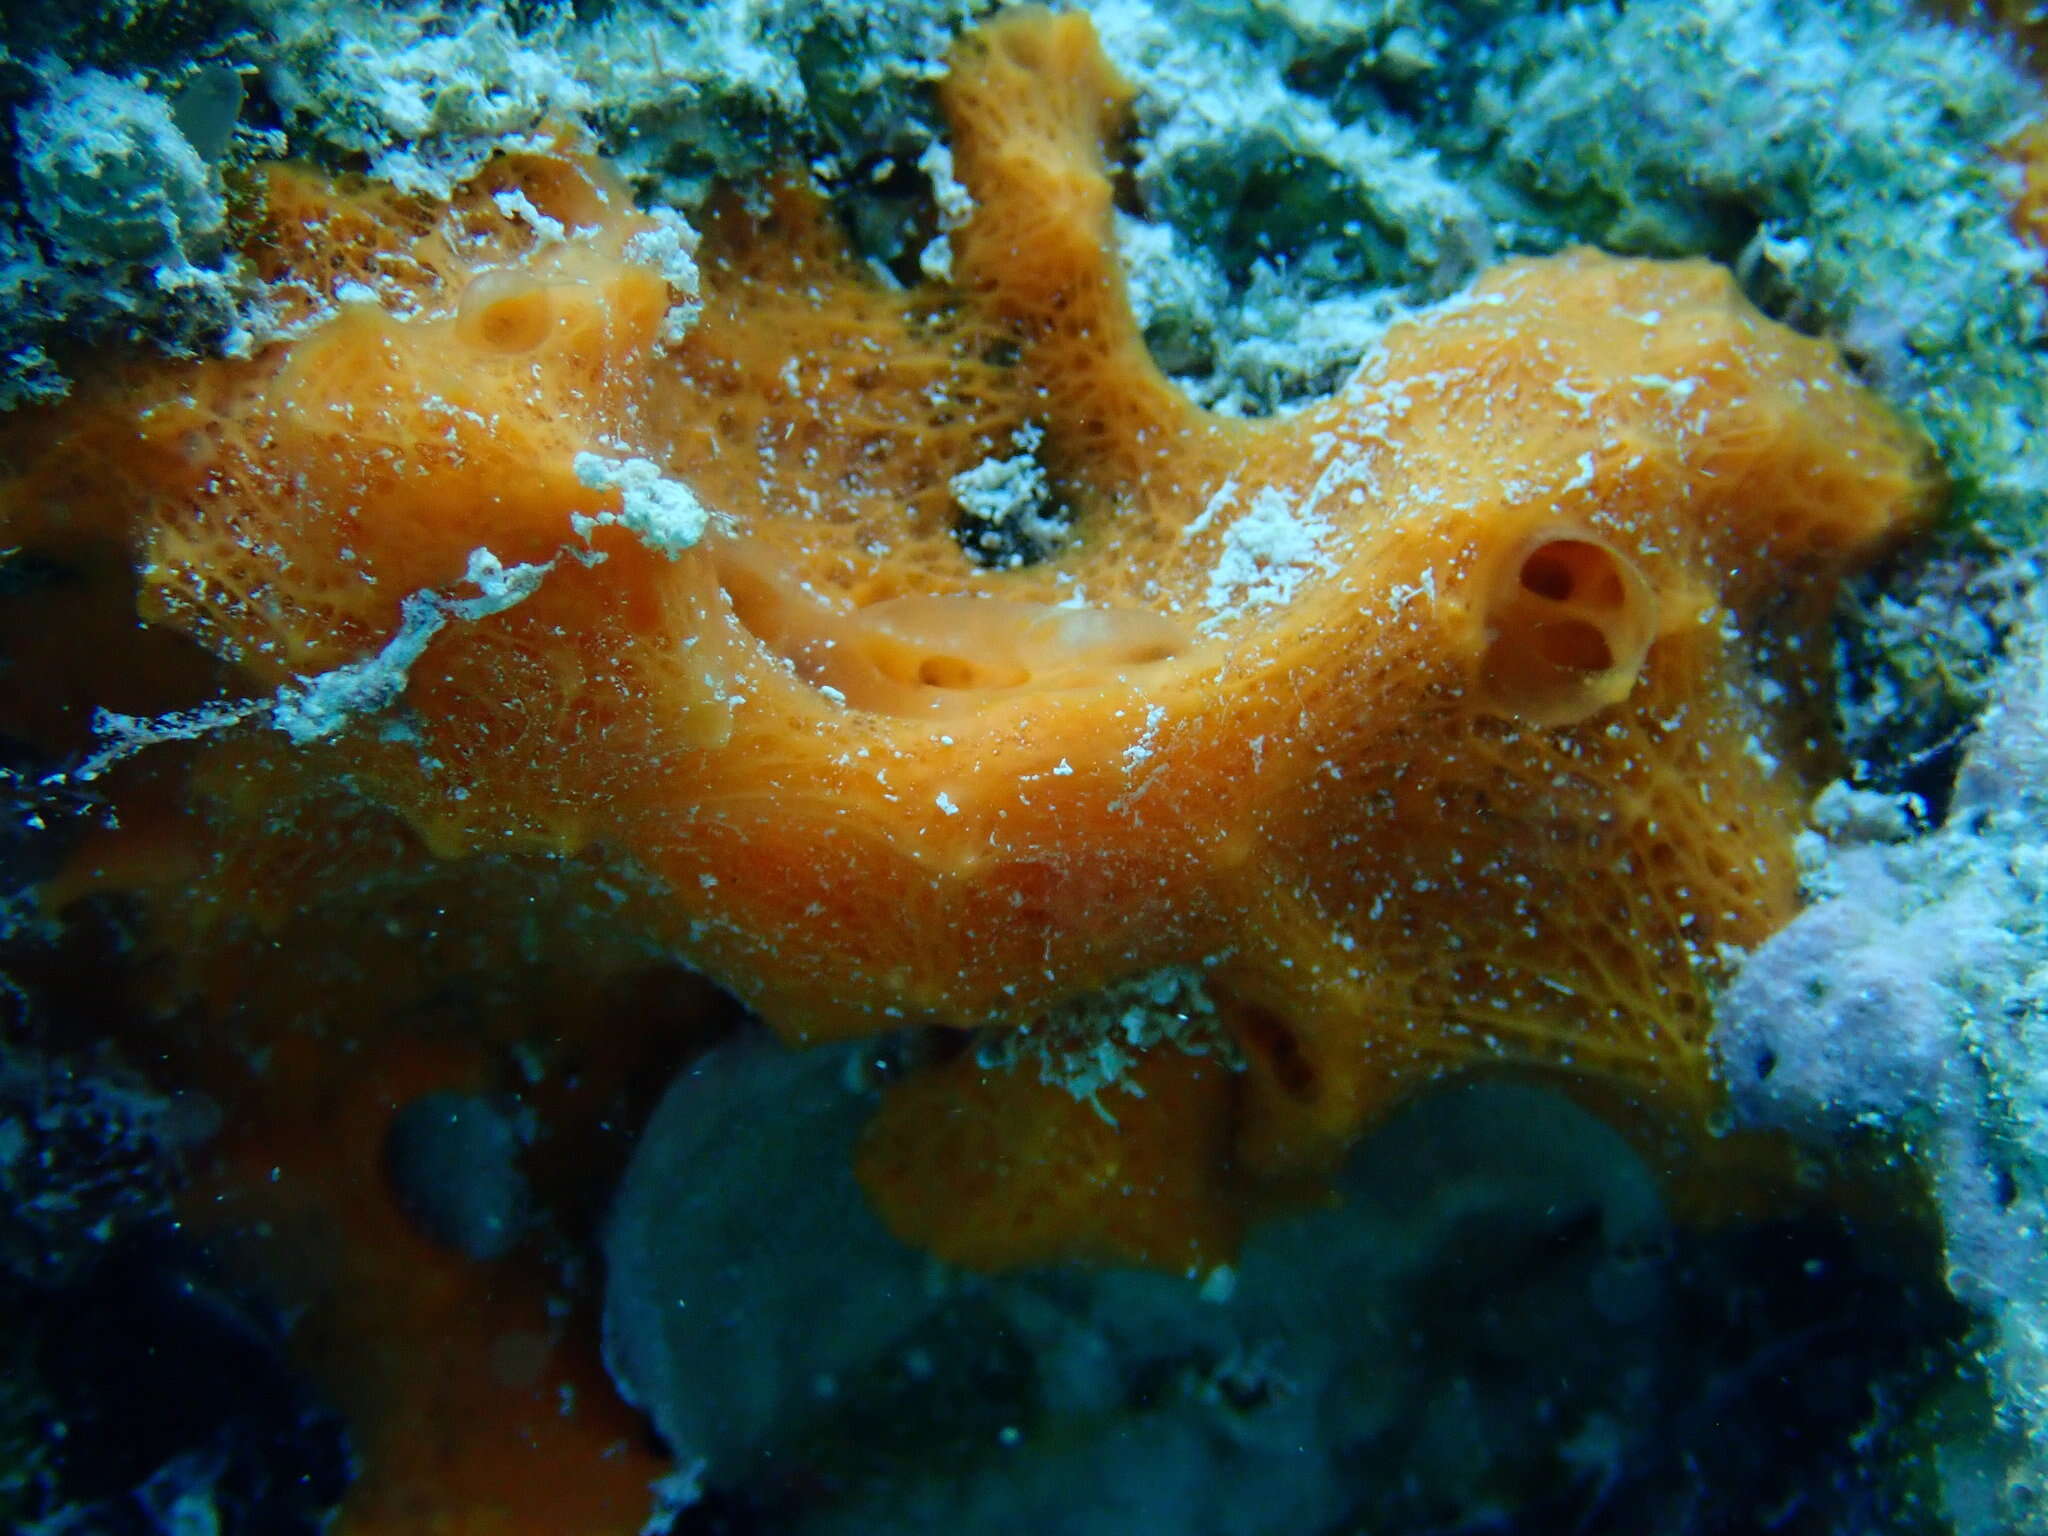 Image of orange lumpy encrusting sponge